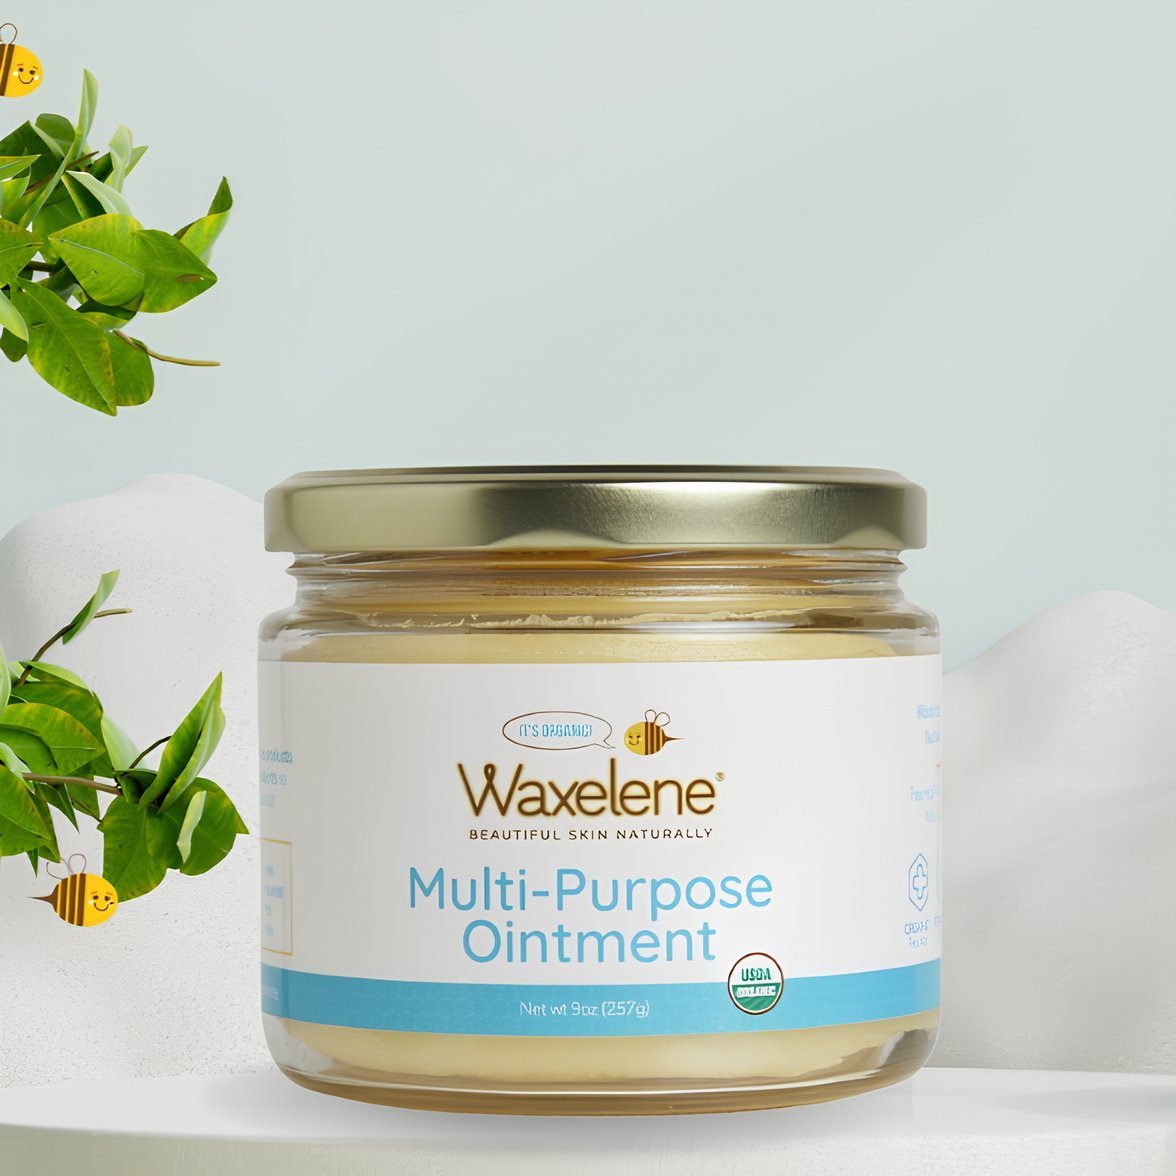 Waxelene Multi-Purpose Ointment, Organic, Large Jar